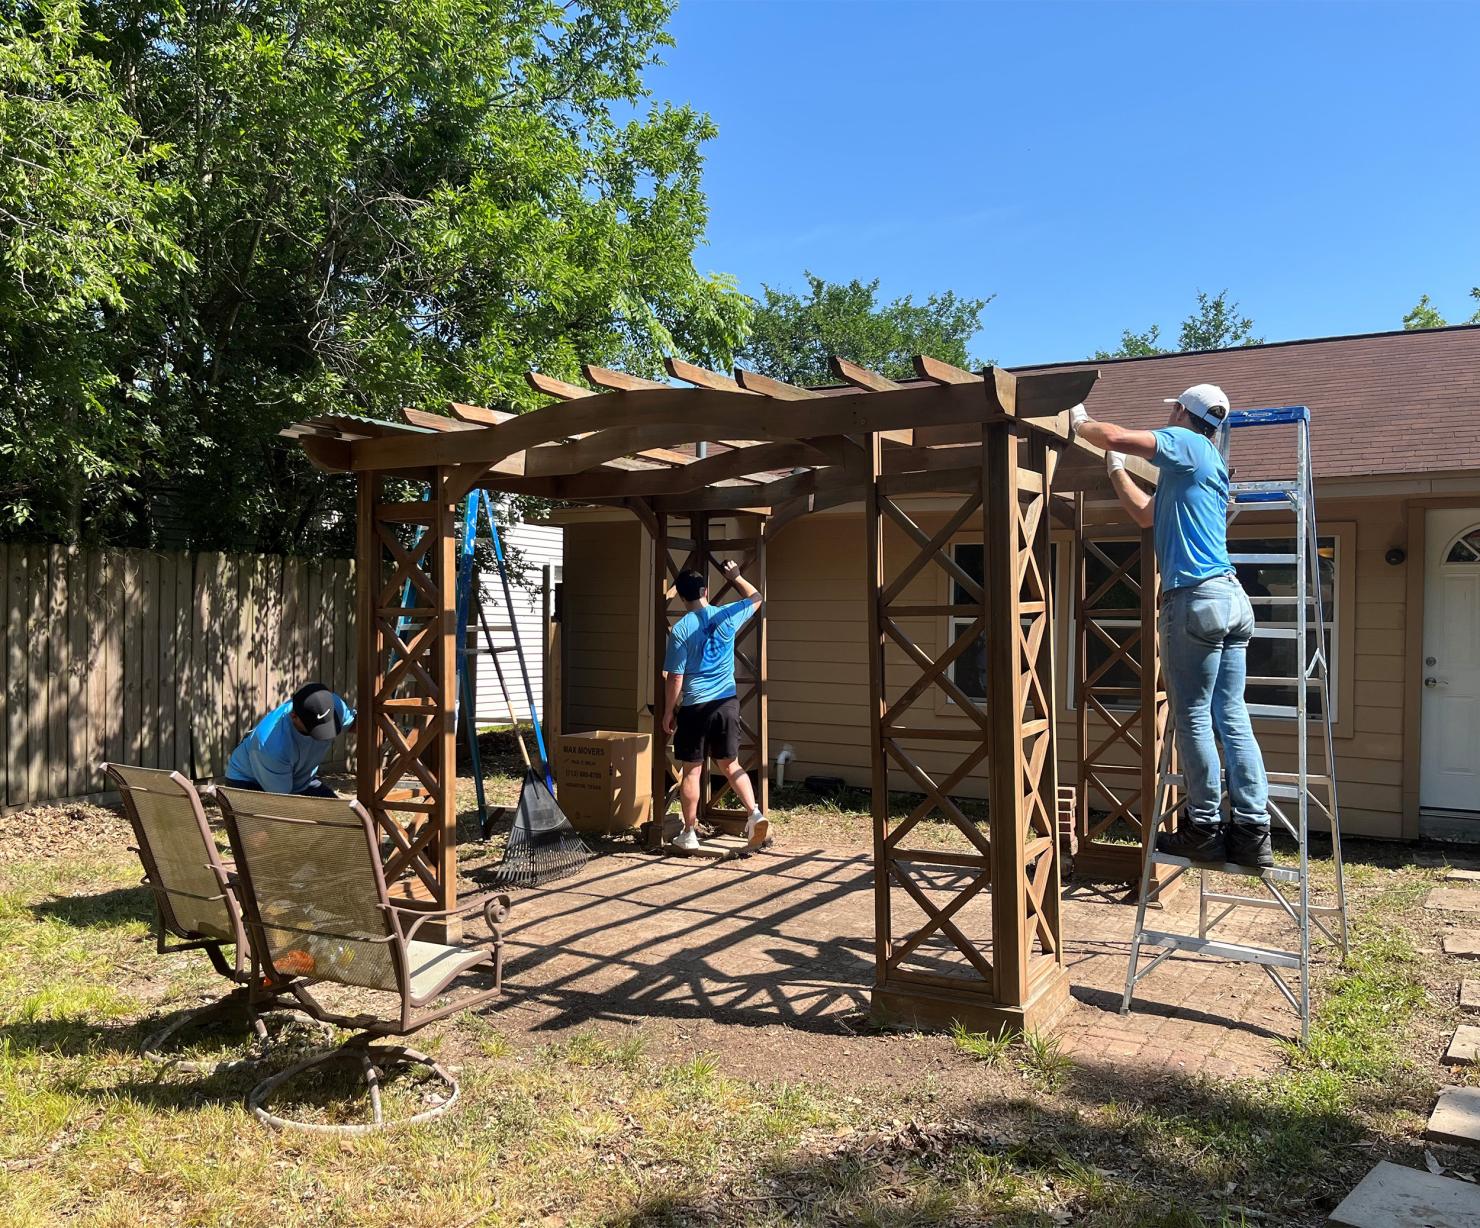 EnCap employees make repairs to the home’s backyard gazebo.